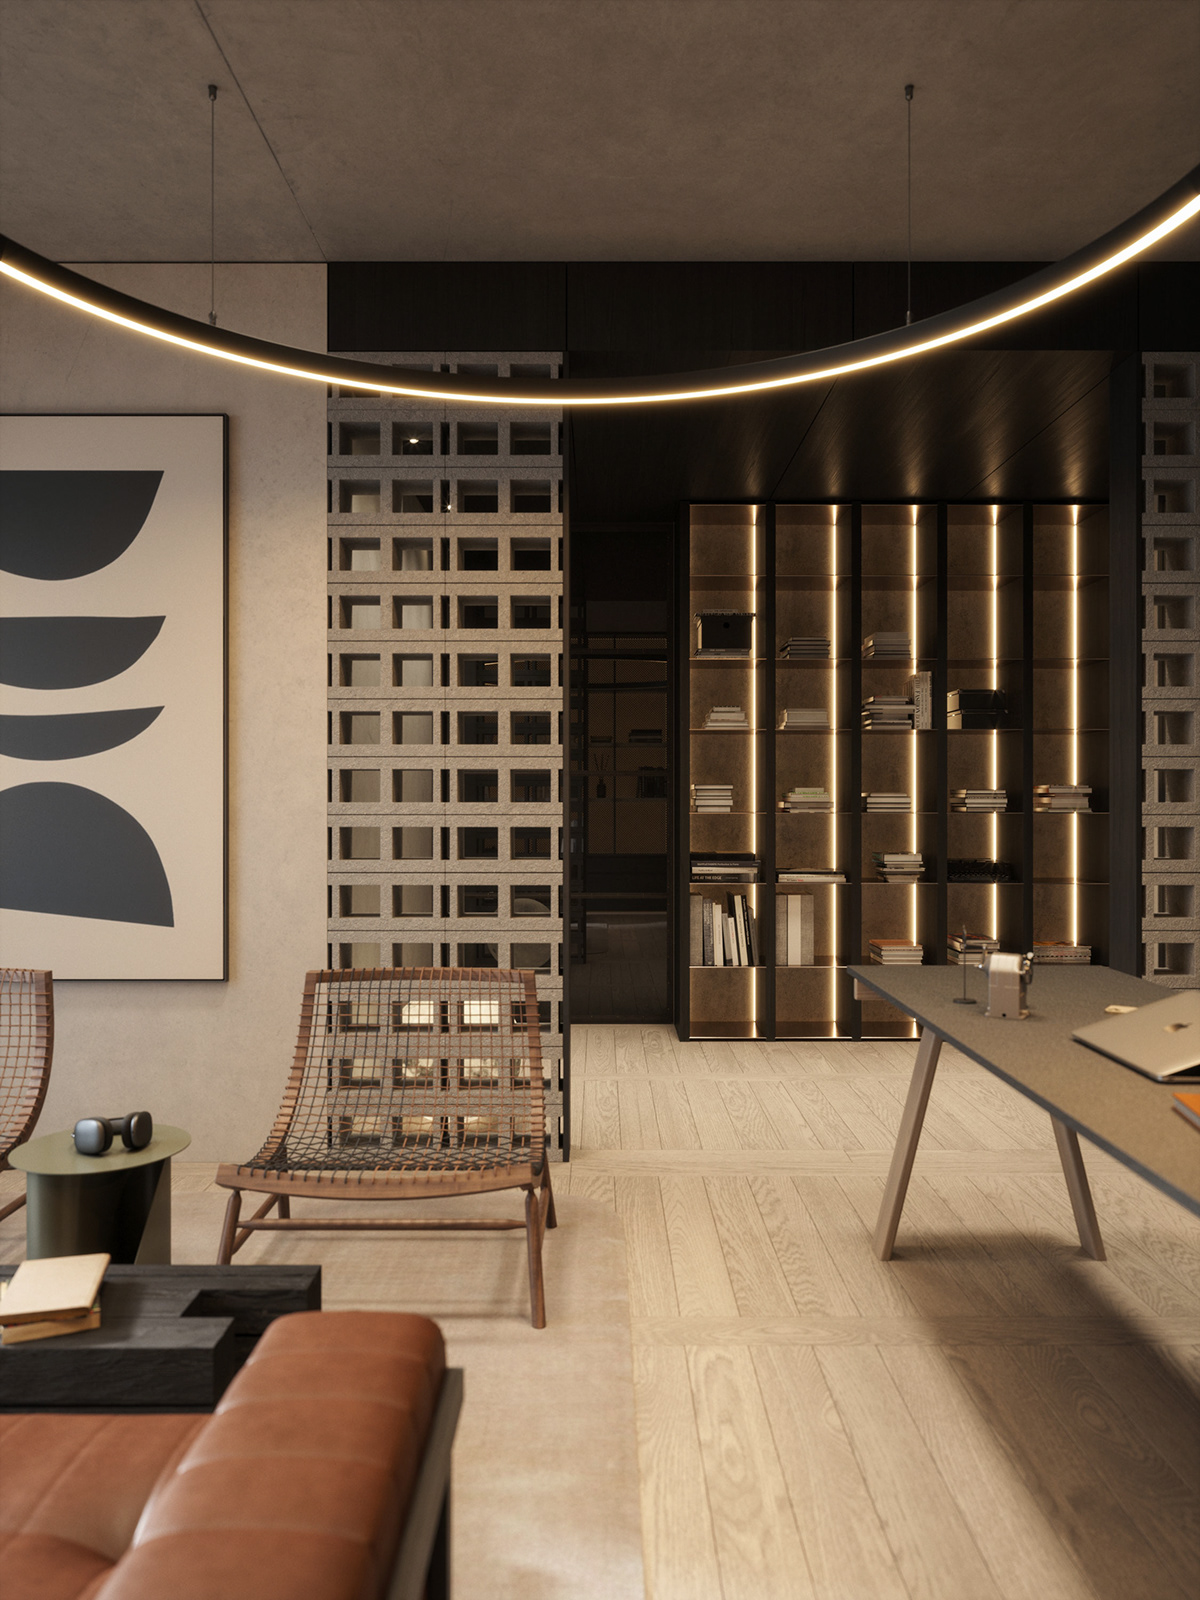 3ds max CGI design FStorm home decor Interior Latvia Office Render usa